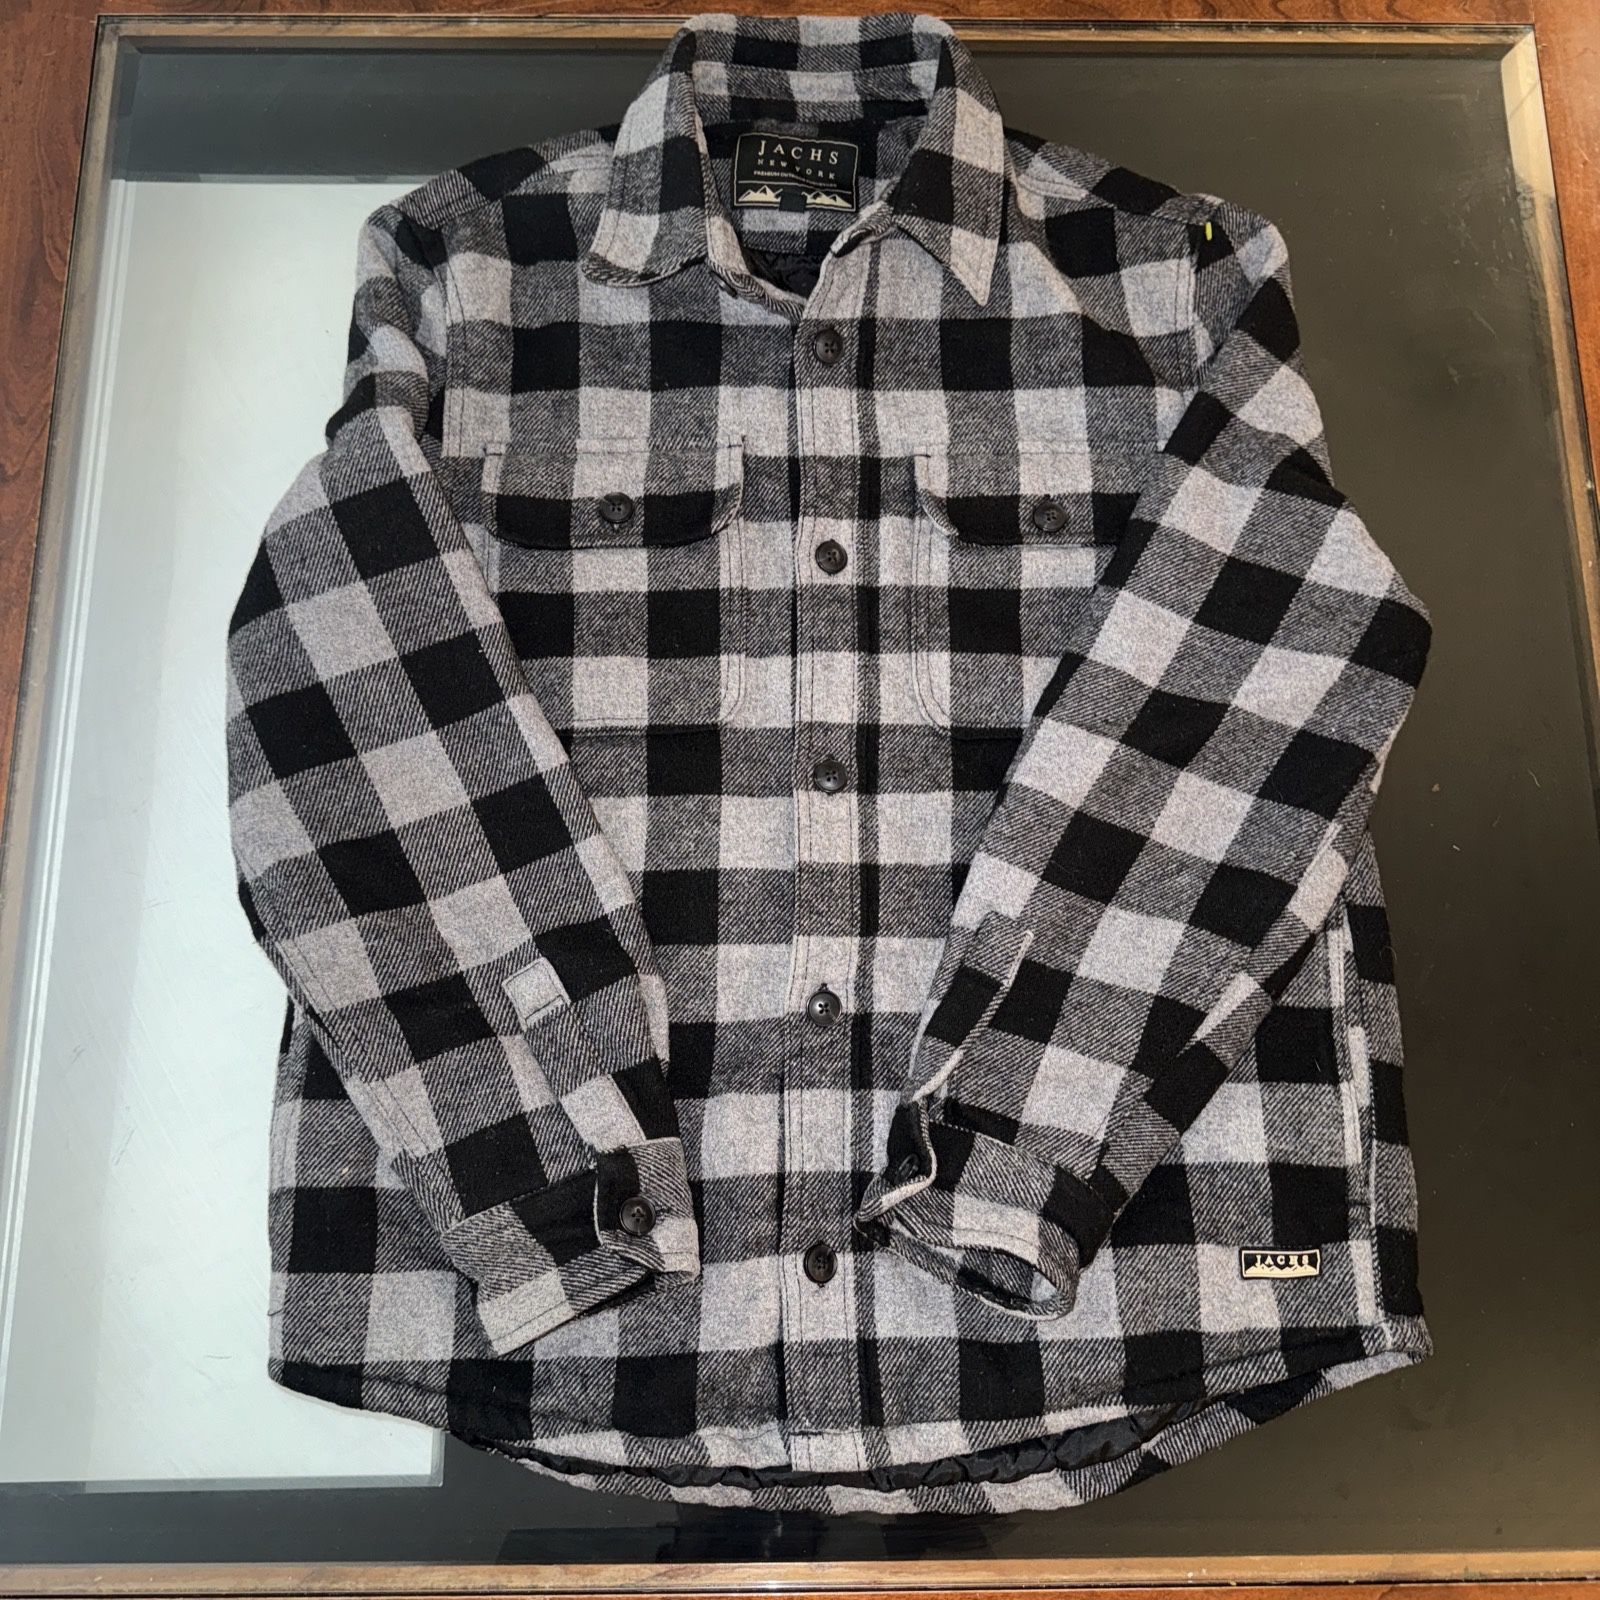 Jachs New York Shirt Jacket, Black/gray Checkered, Medium, Poly/wool Blend (A)